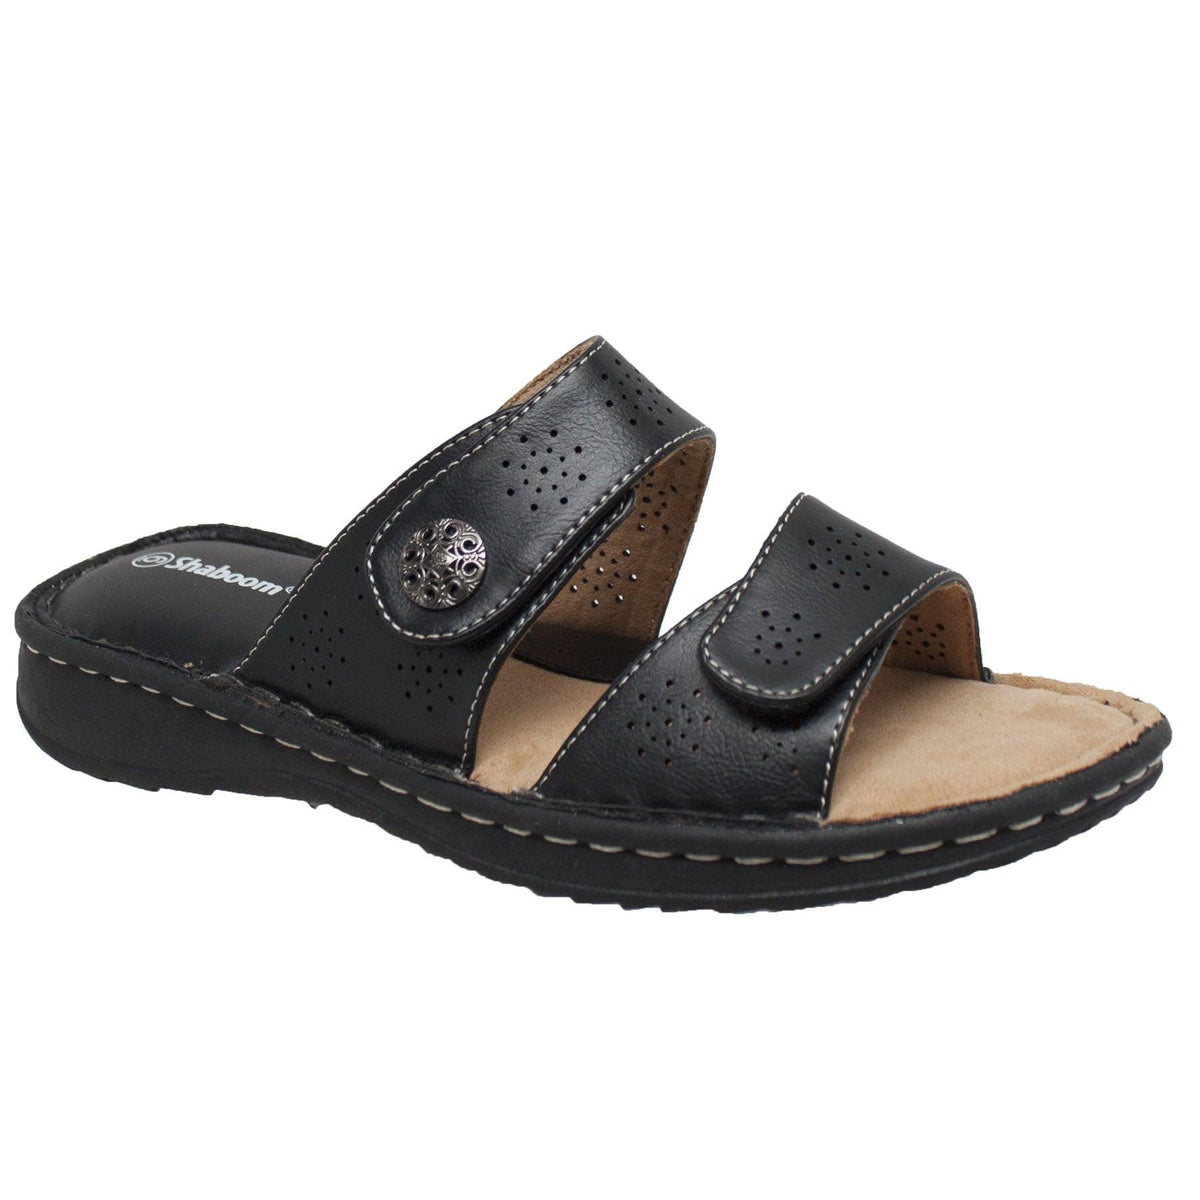 Shaboom Women's Comfort Slide Sandals Black - Flyclothing LLC